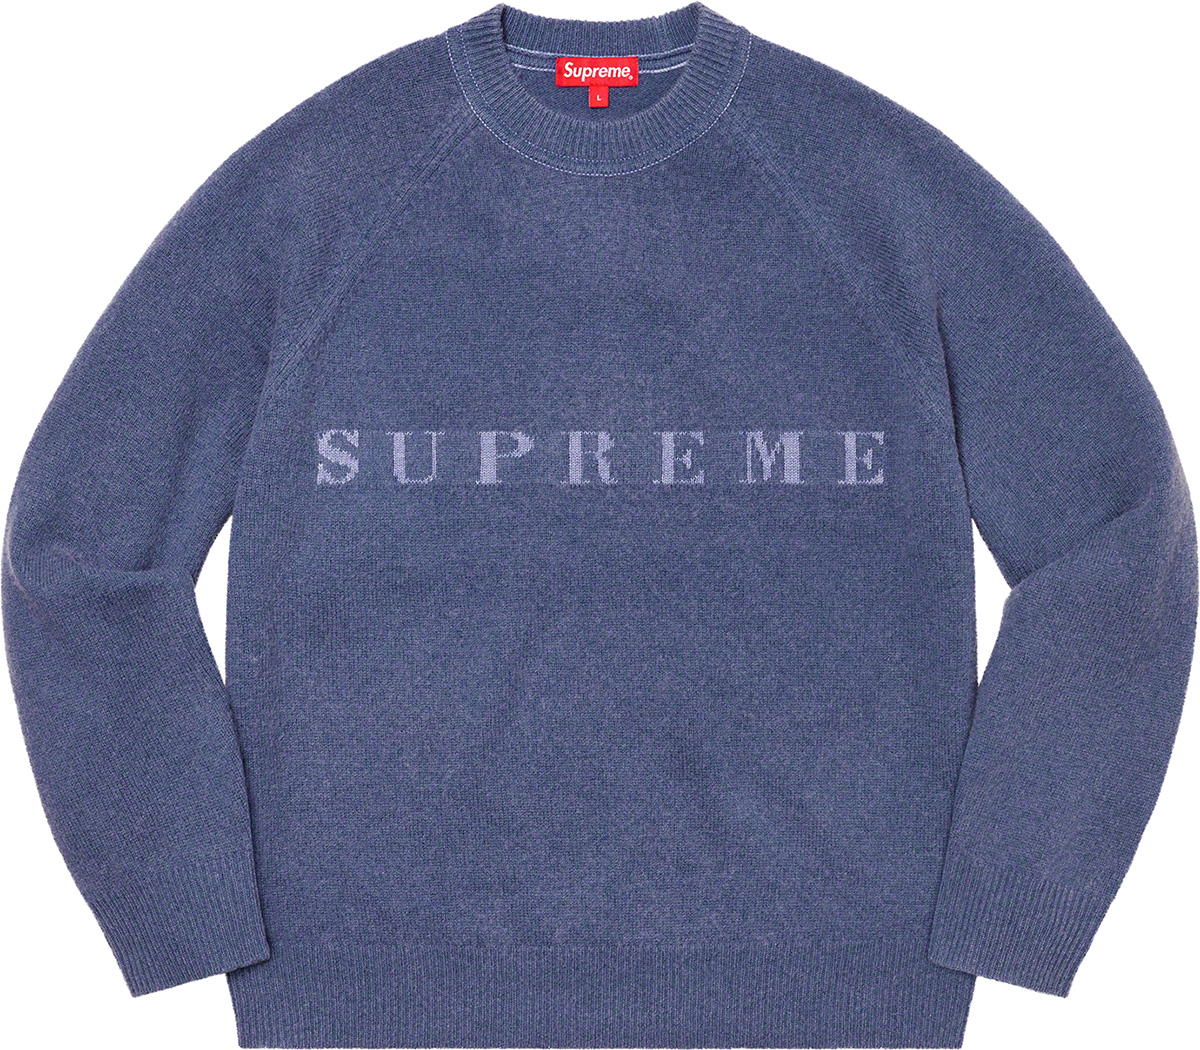 Stone Washed Sweater - fall winter 2020 - Supreme